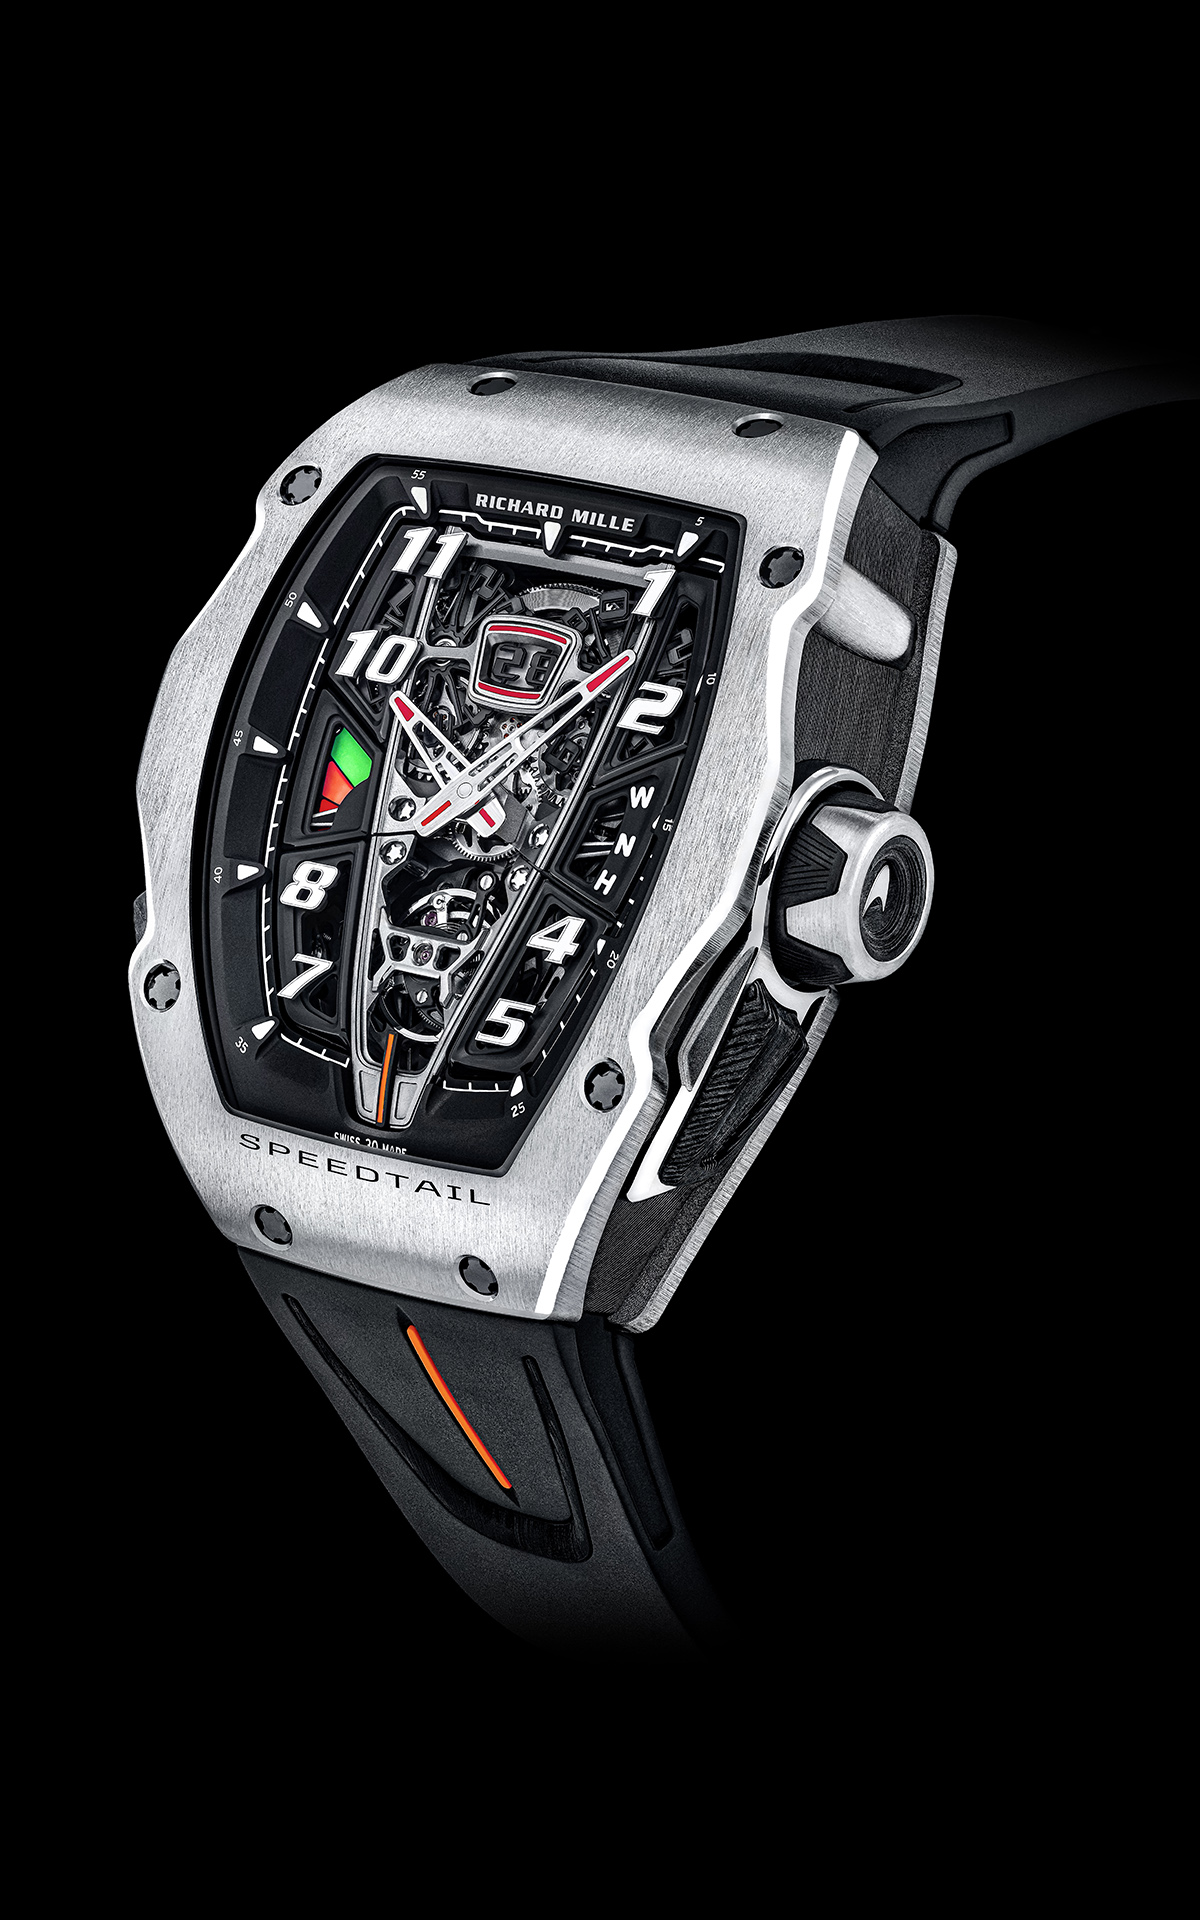 Richard Mille RM 40 01 McLaren Speedtail cover fx